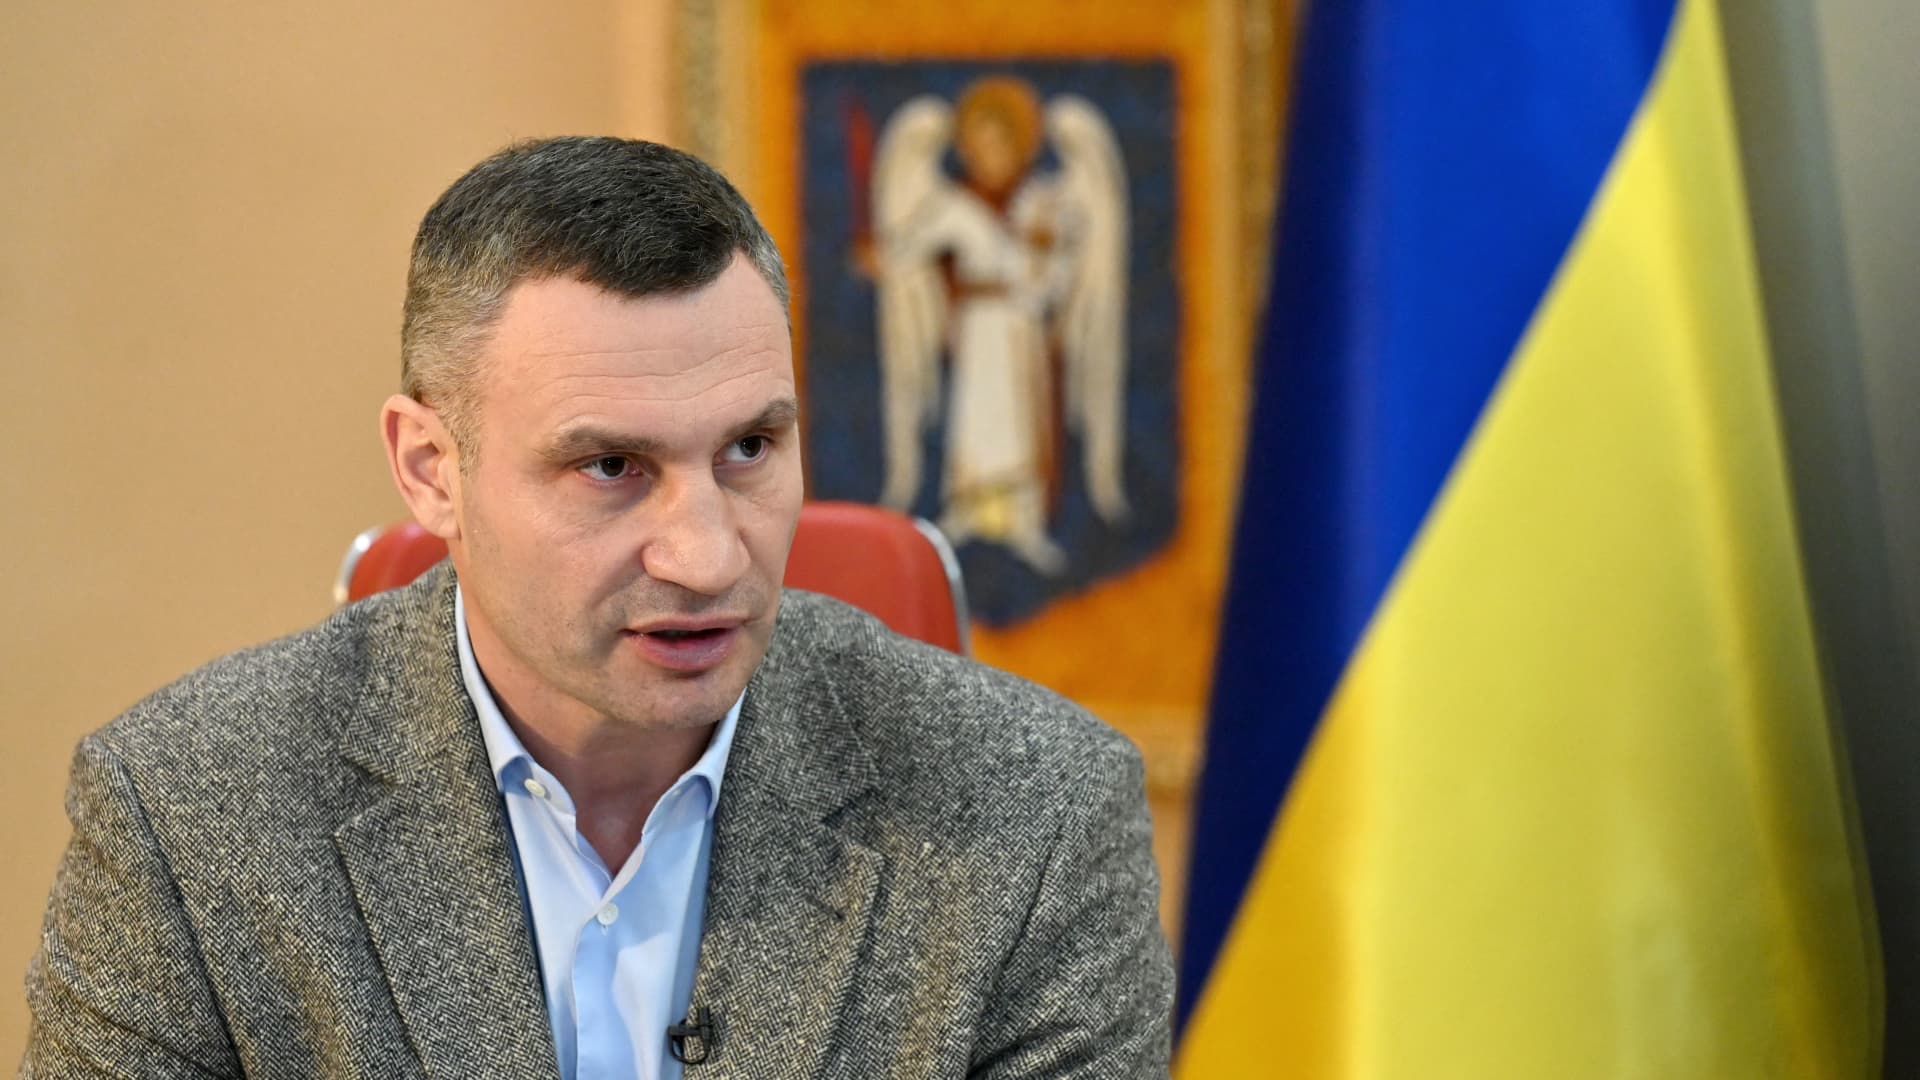 Mayor of Kyiv Vitali Klitschko at his office on February 10, 2022.